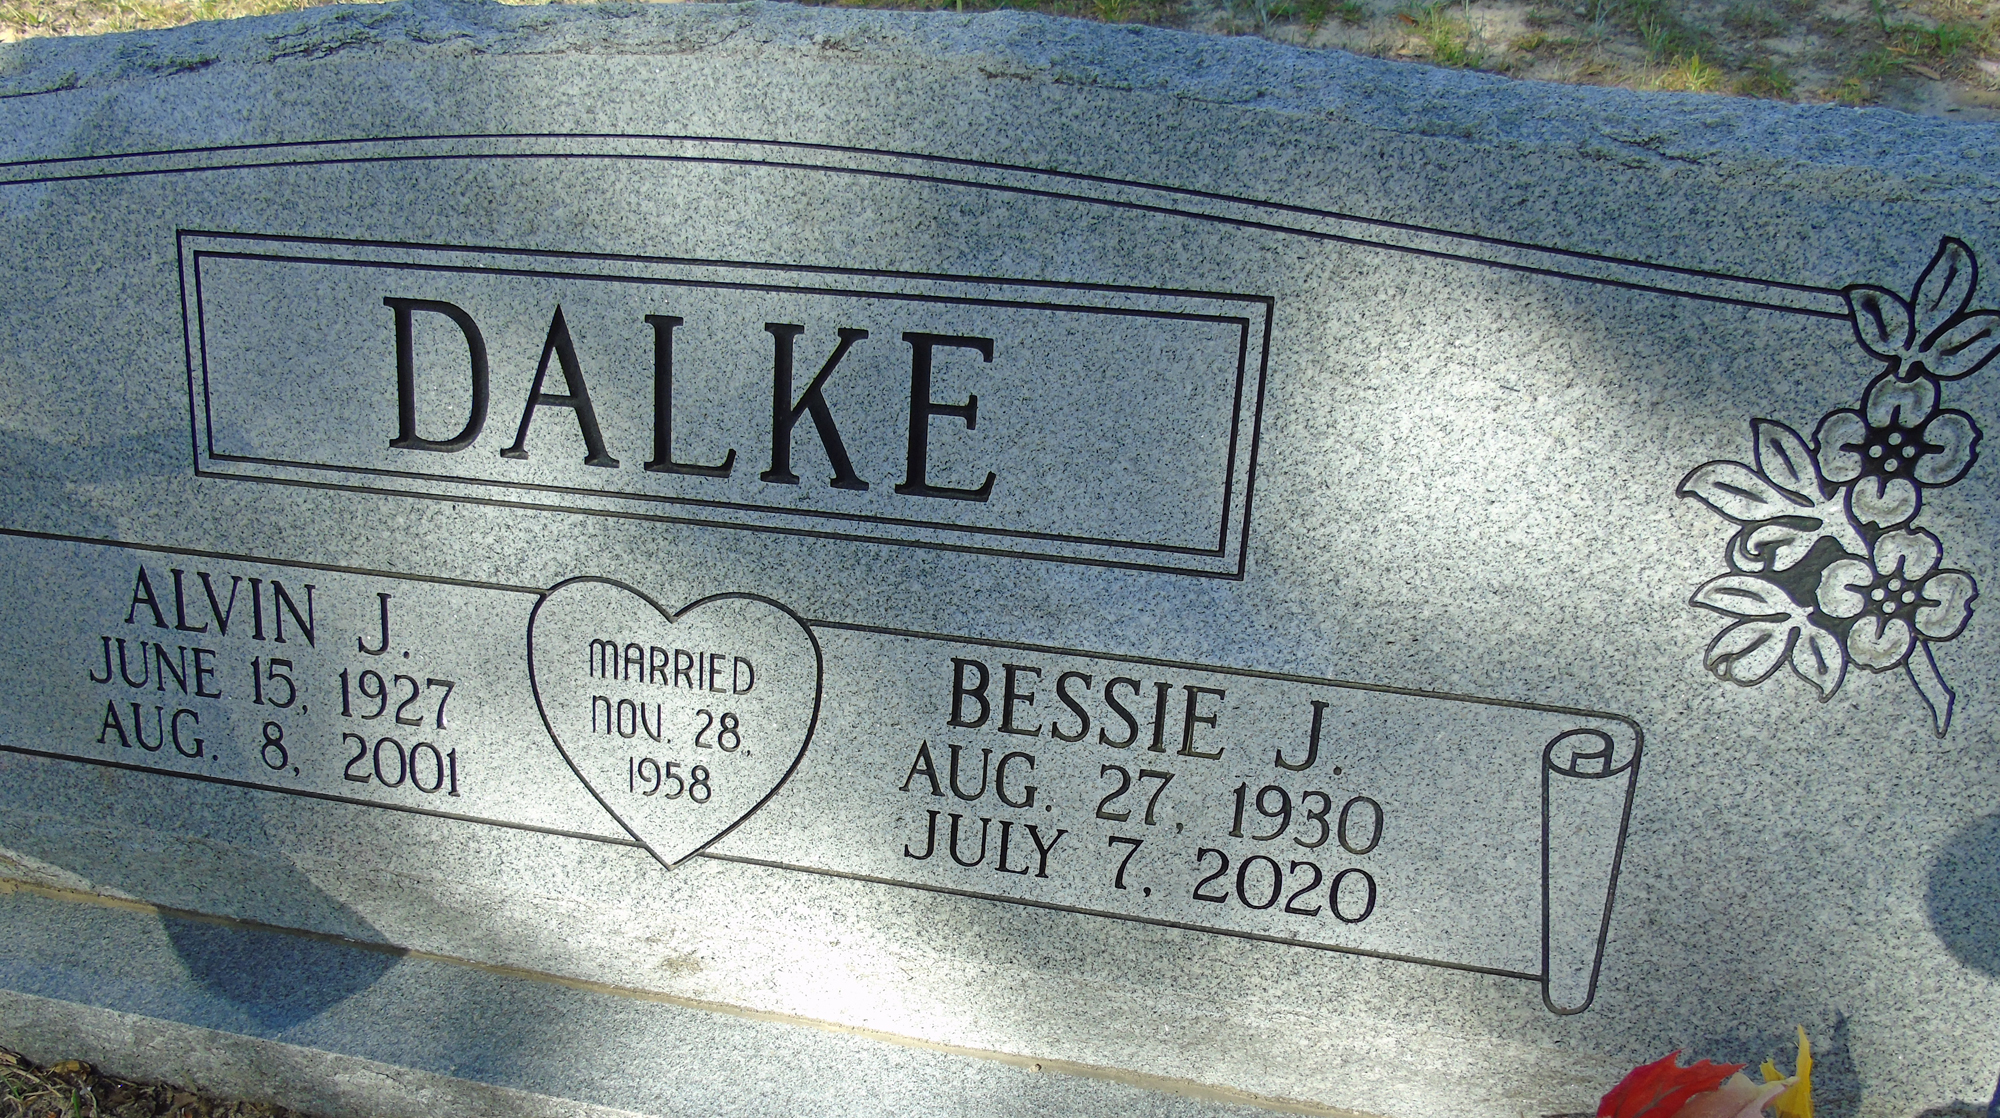 Headstone for Dalke, Bessie